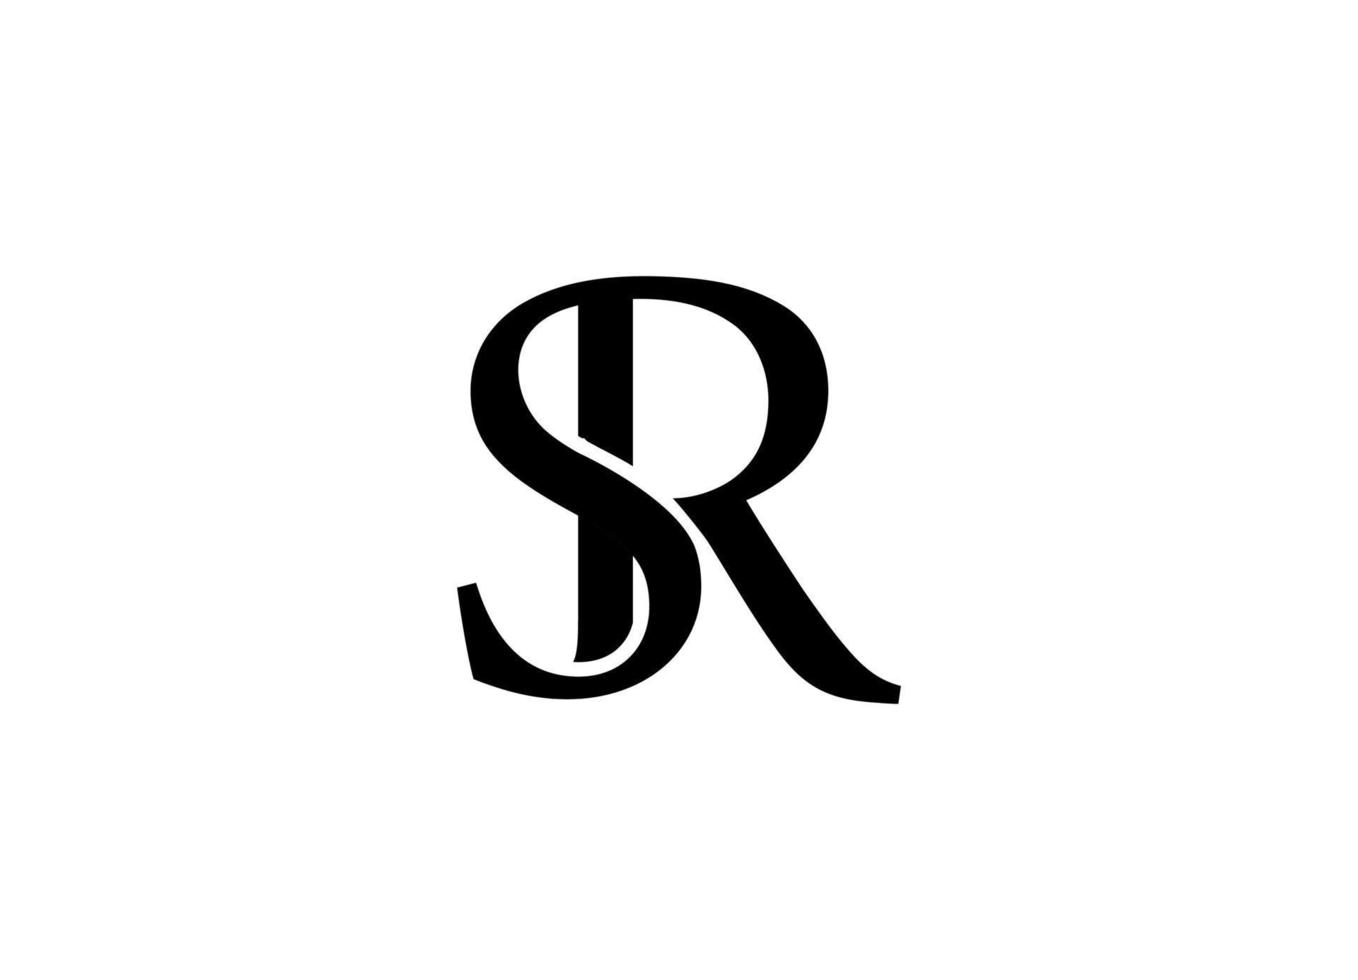 arquivo de vetor gratuito de design de logotipo sr